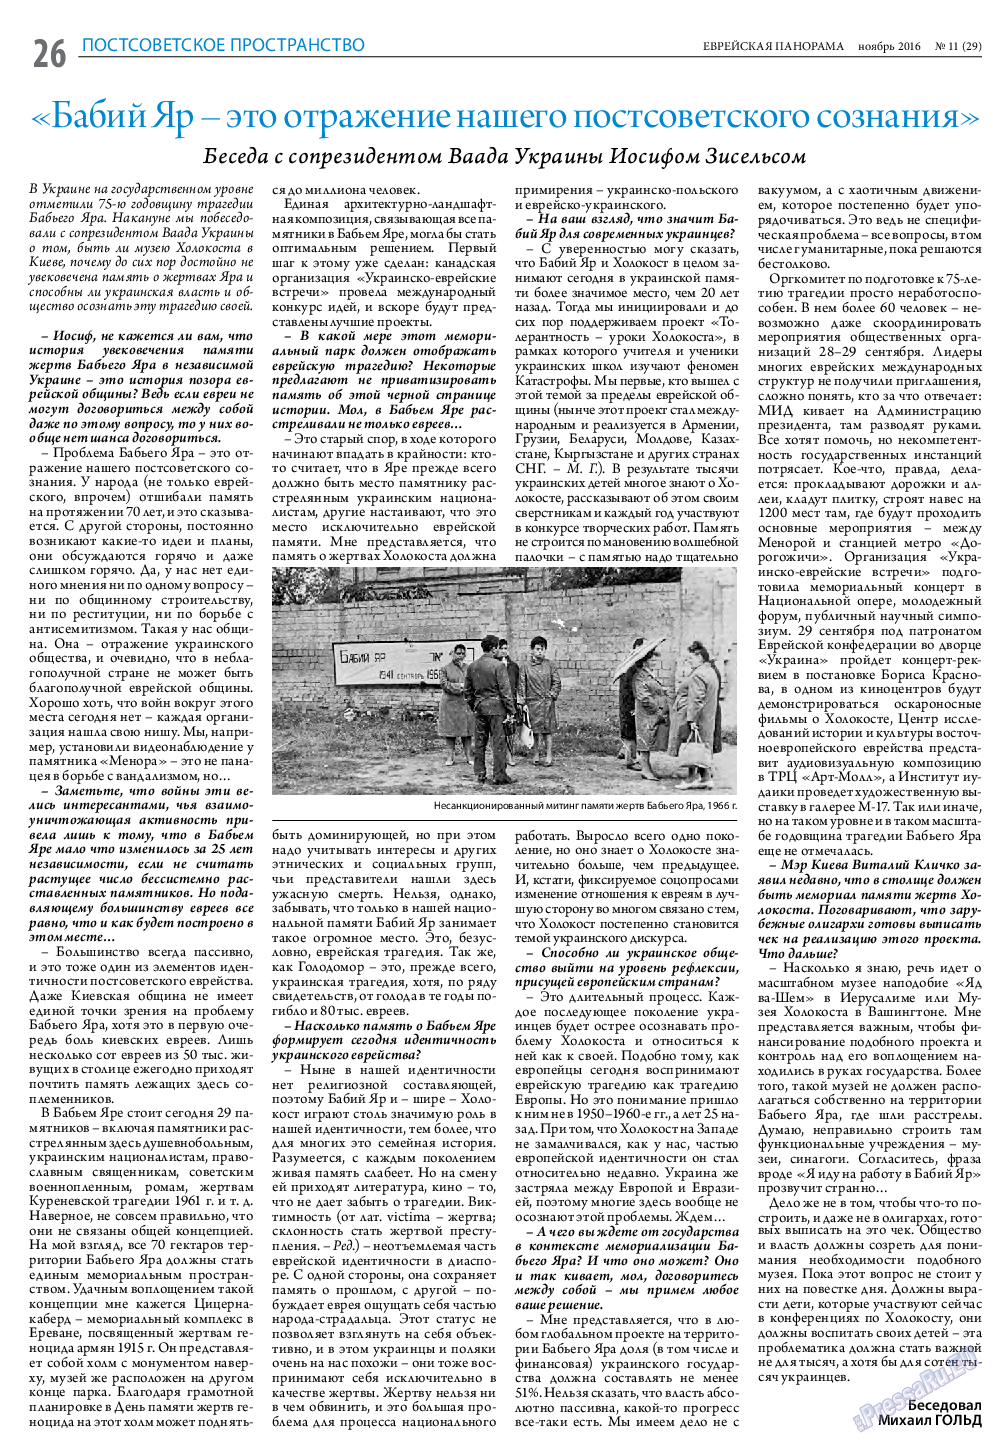 Еврейская панорама, газета. 2016 №11 стр.26